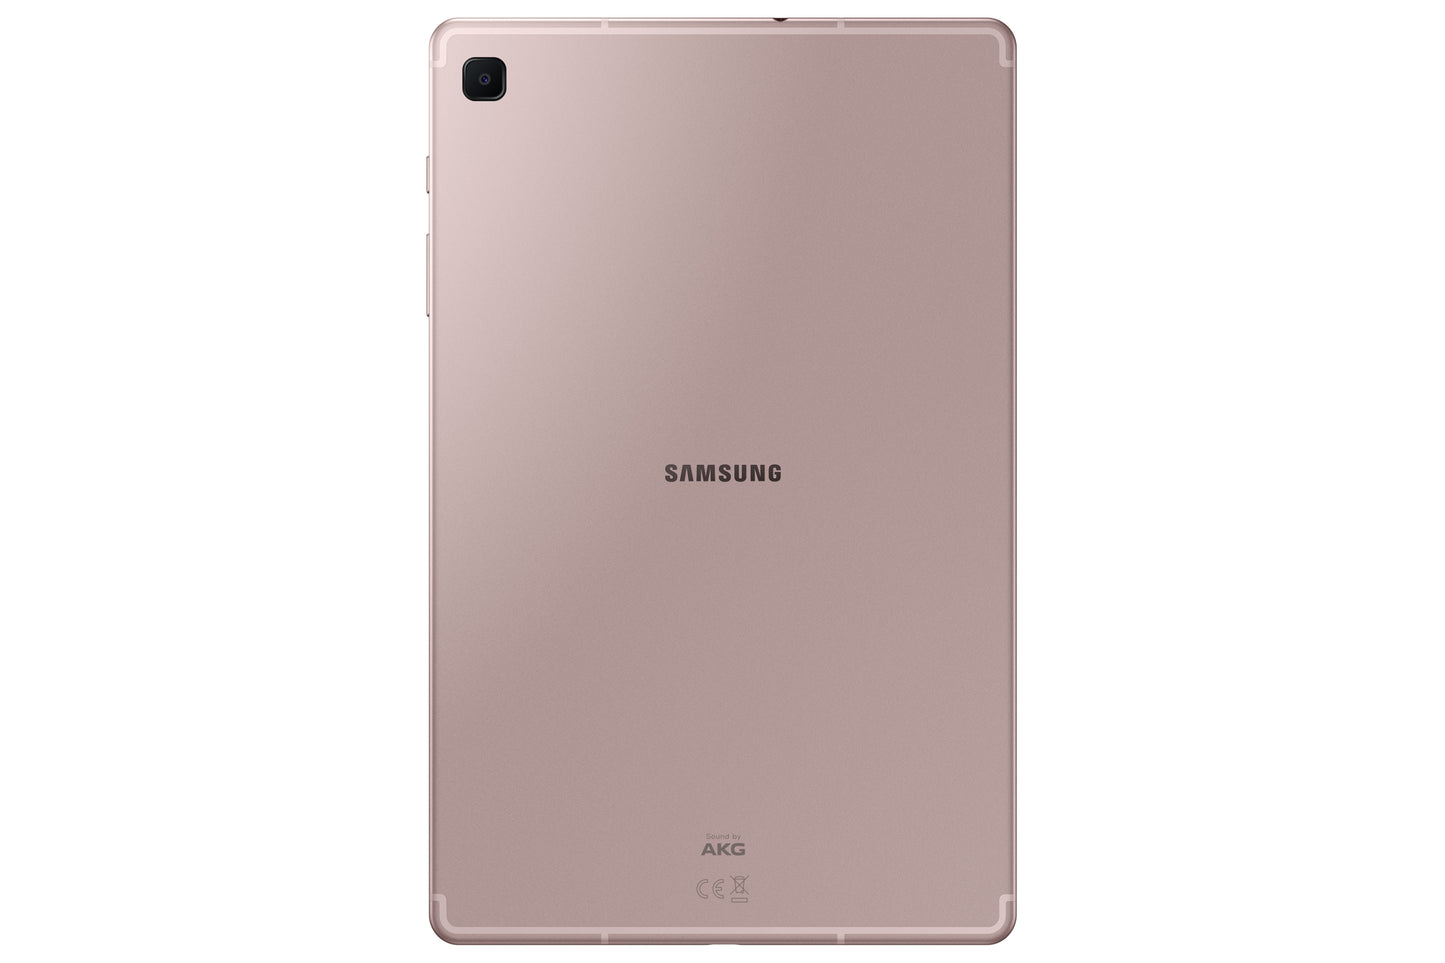 Samsung Galaxy Tab S6 Lite Wi-Fi 64GB 10.4-in Tablet - Chiffon Rose